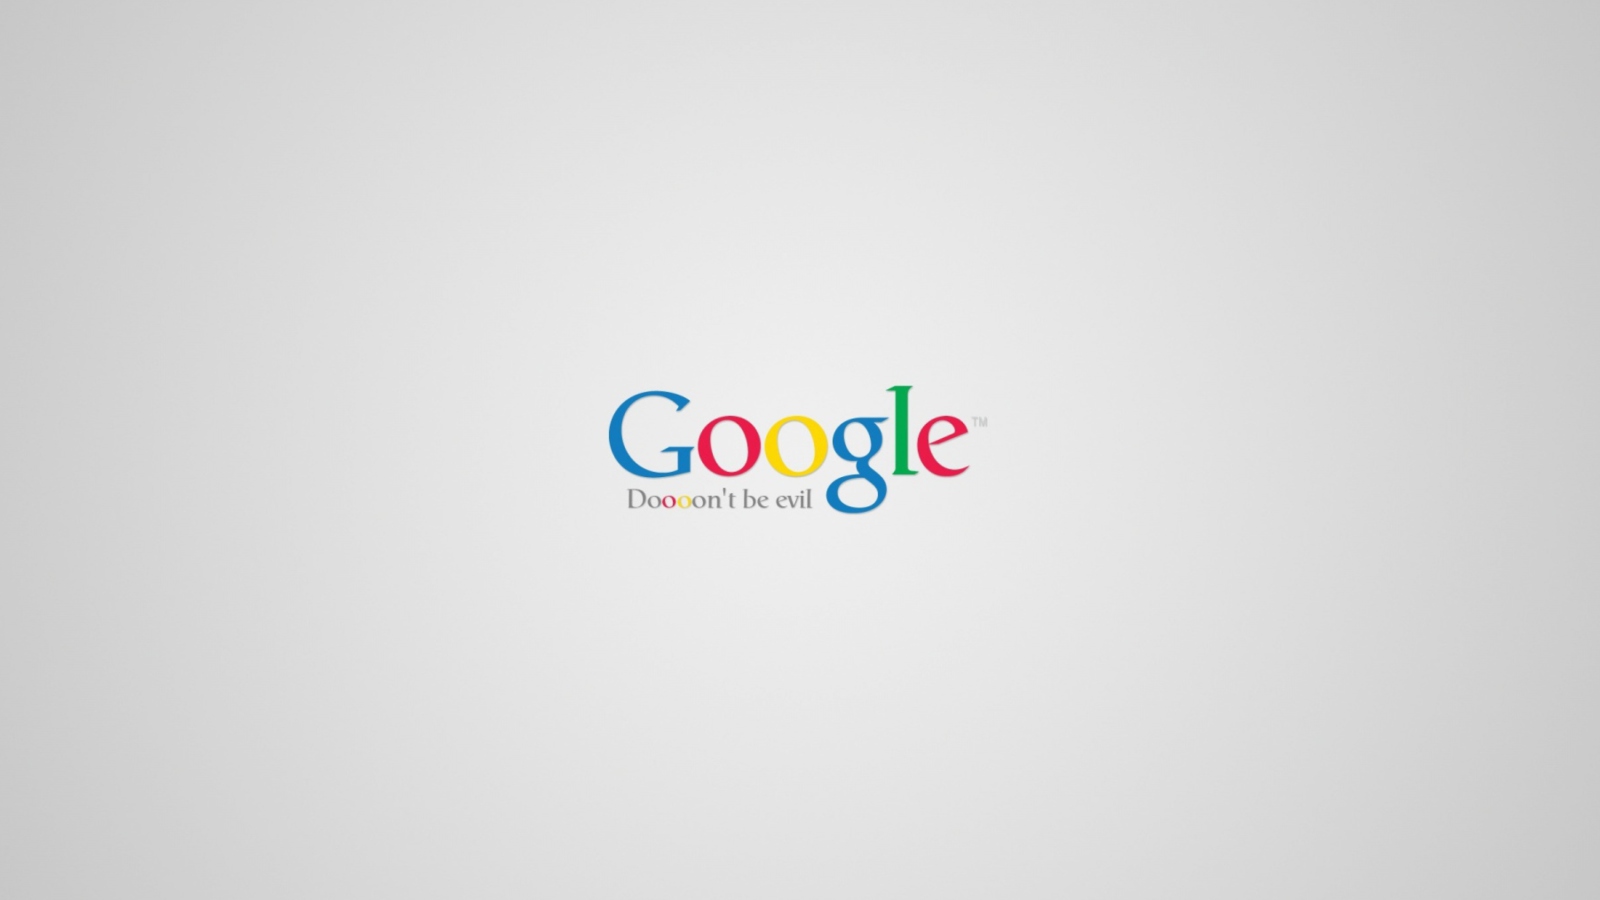 Das Google - Don't be evil Wallpaper 1600x900